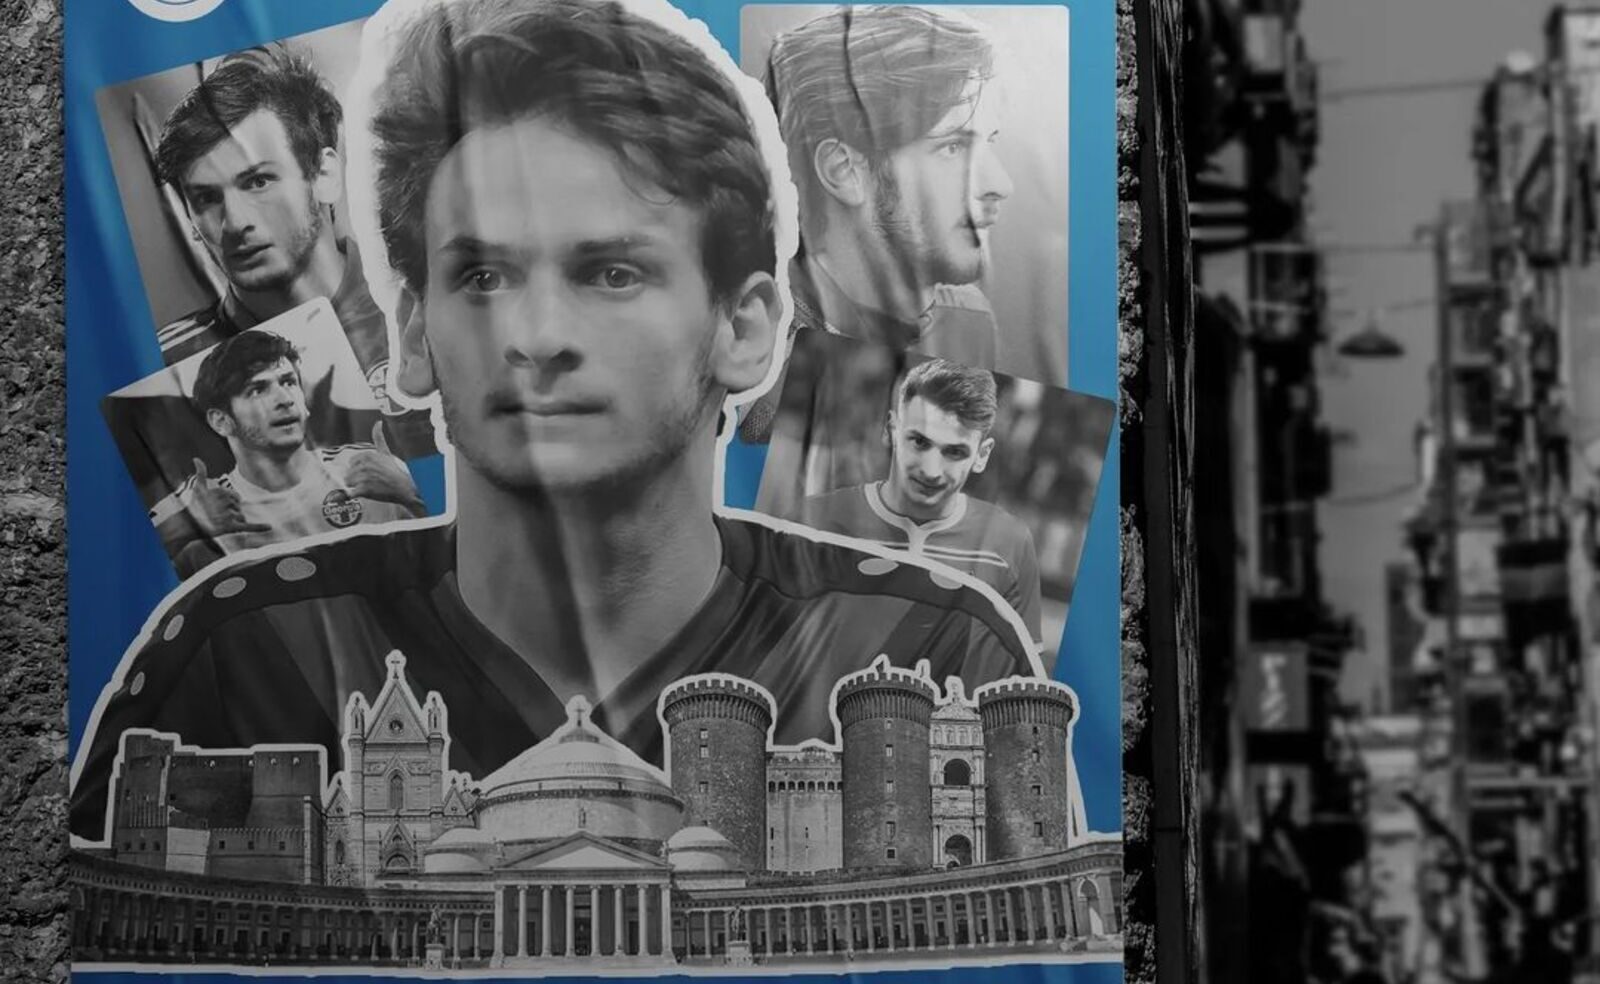 Khvicha Kvaratskhelia welcome poster at Napoli Calcio